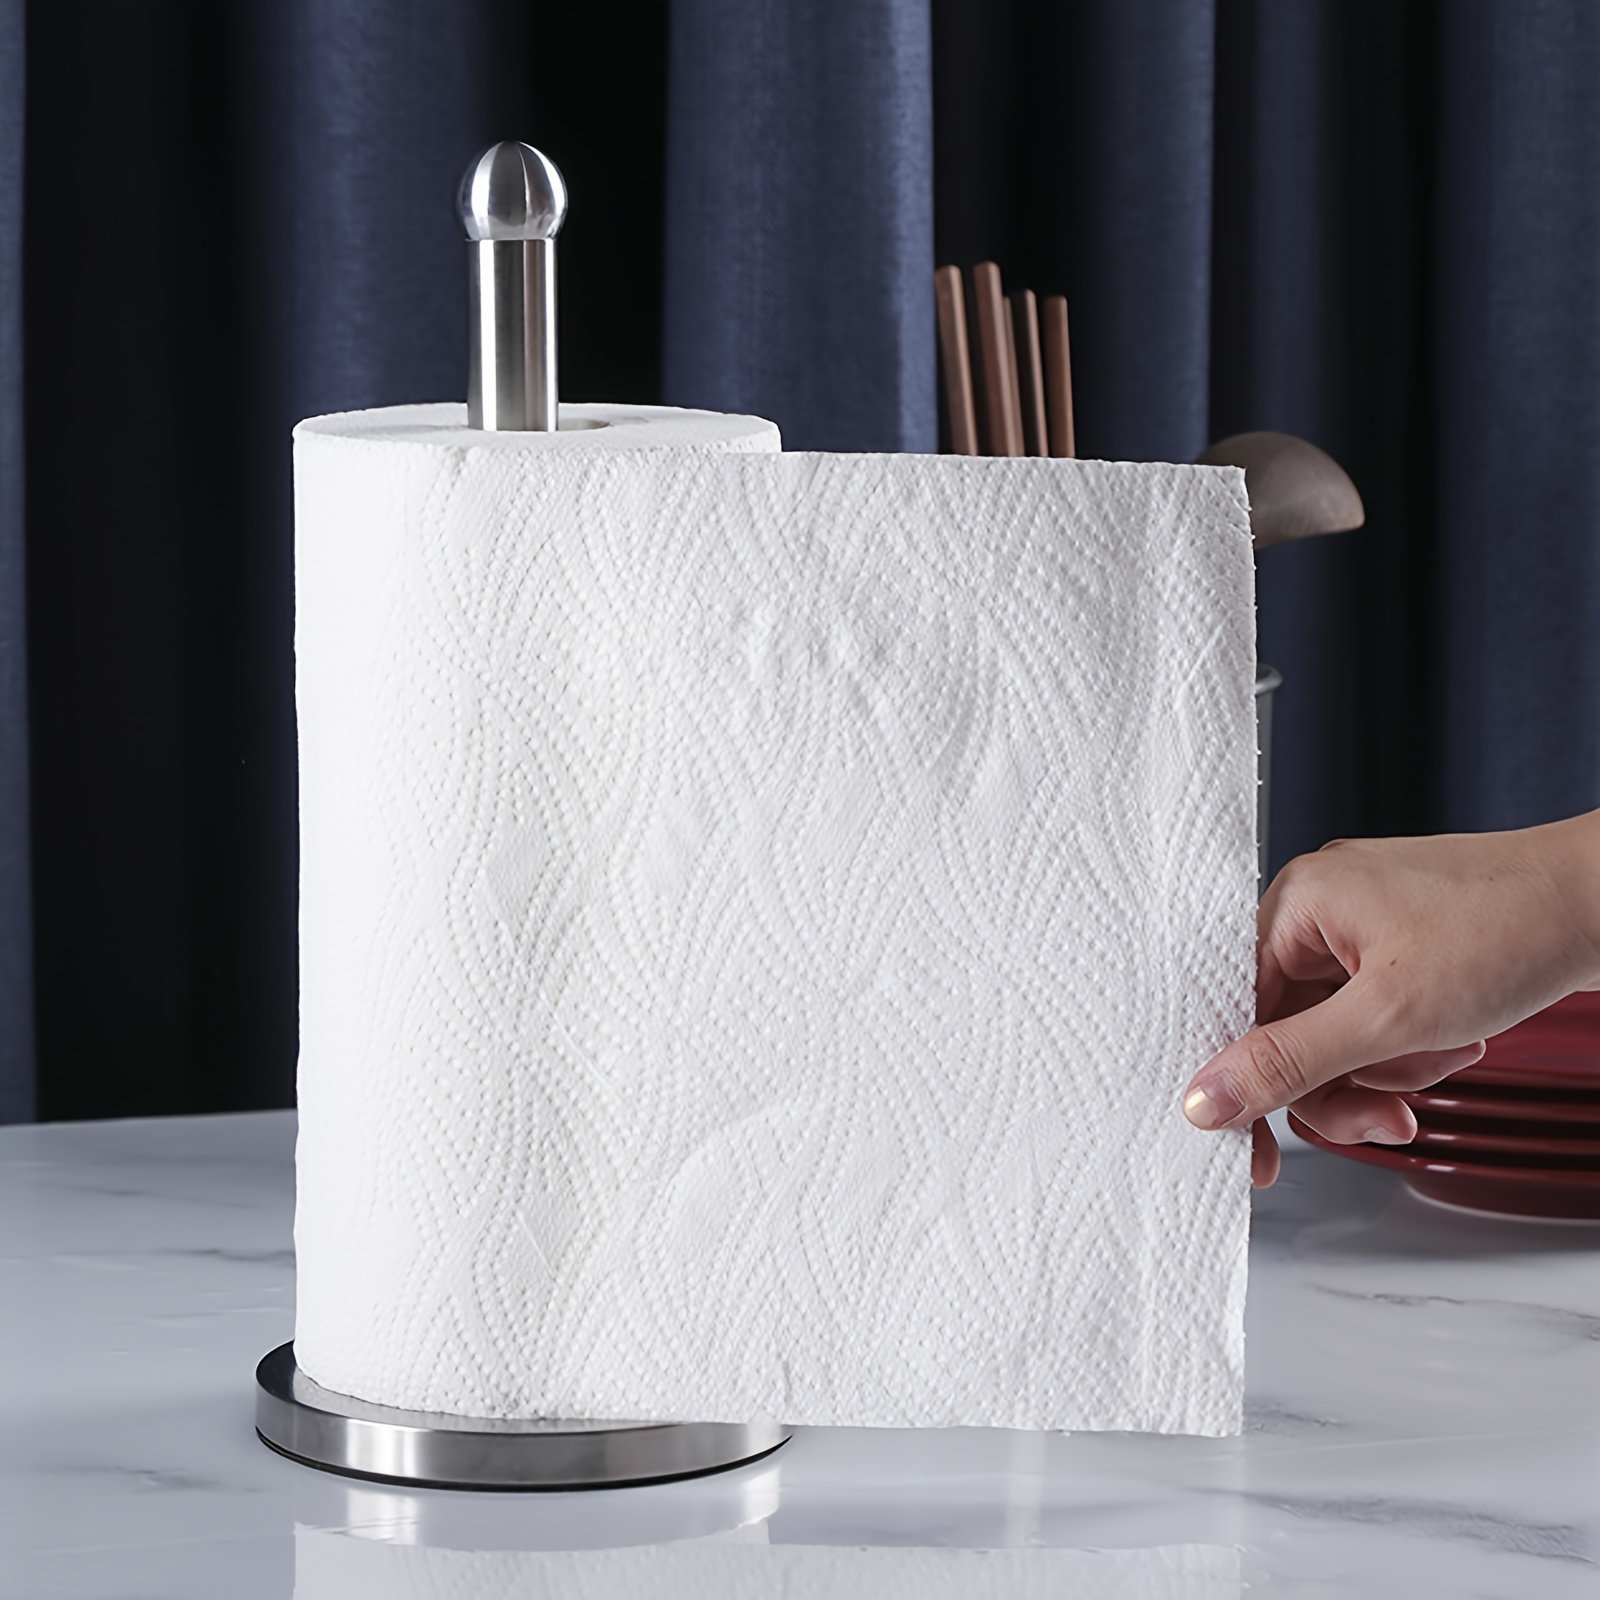 OXO Paper Towel Holder